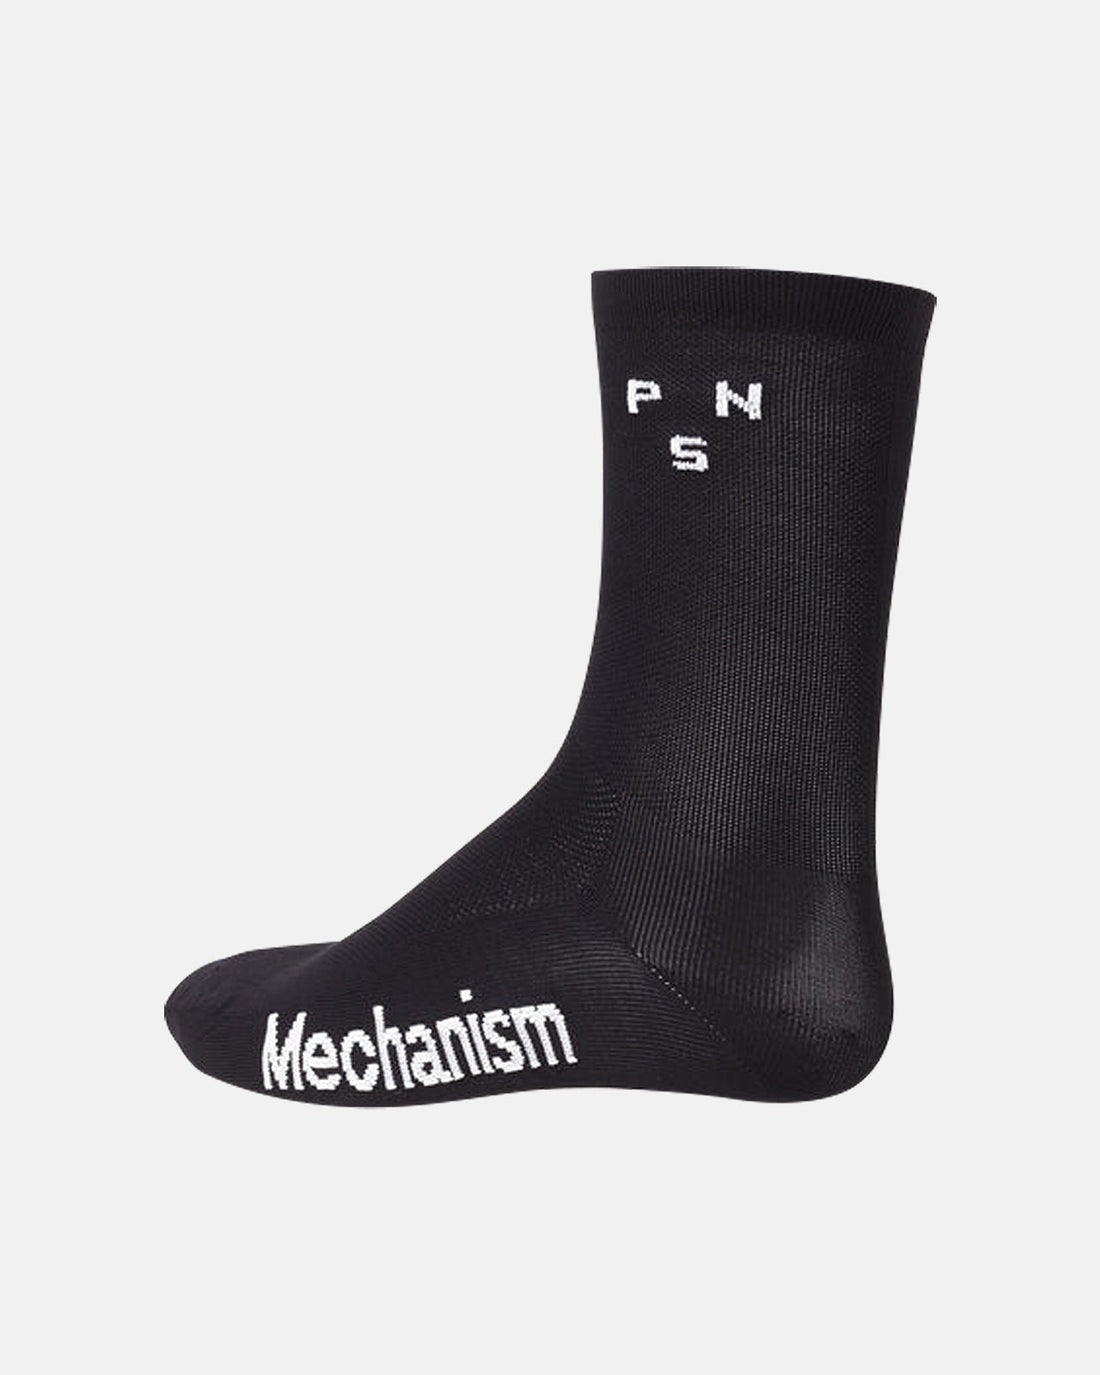 Mechanism Socks - Black - Pas Normal Studios